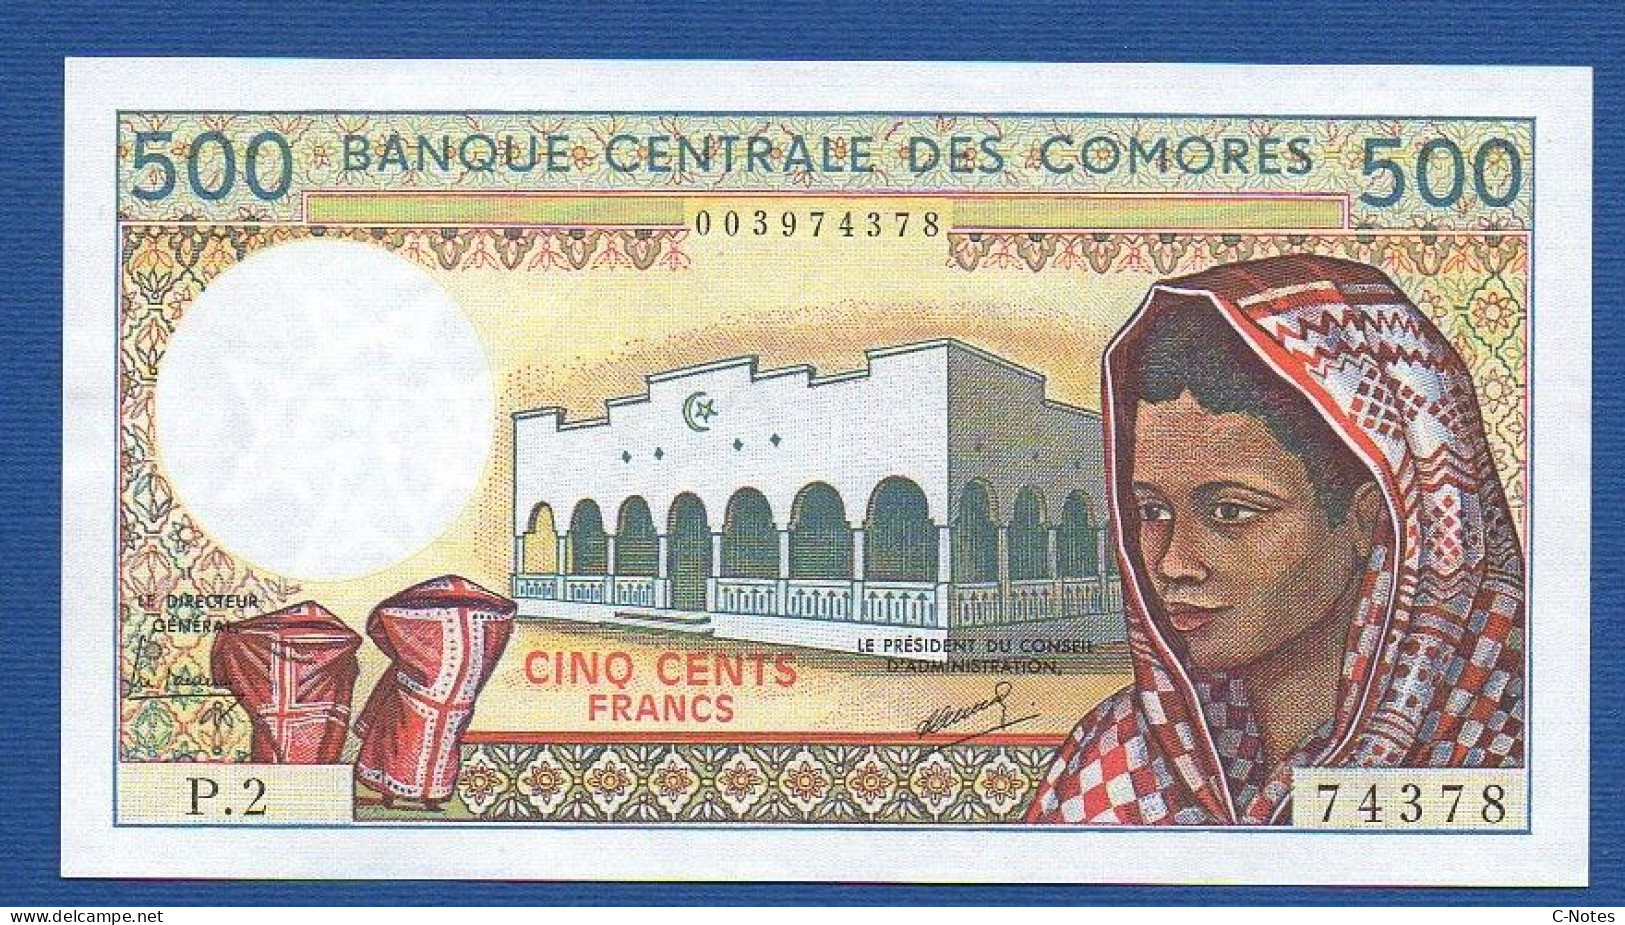 COMOROS - P.10a2 – 500 Francs ND (1984 - 2004) UNC, S/n P.2 74378 - Comores